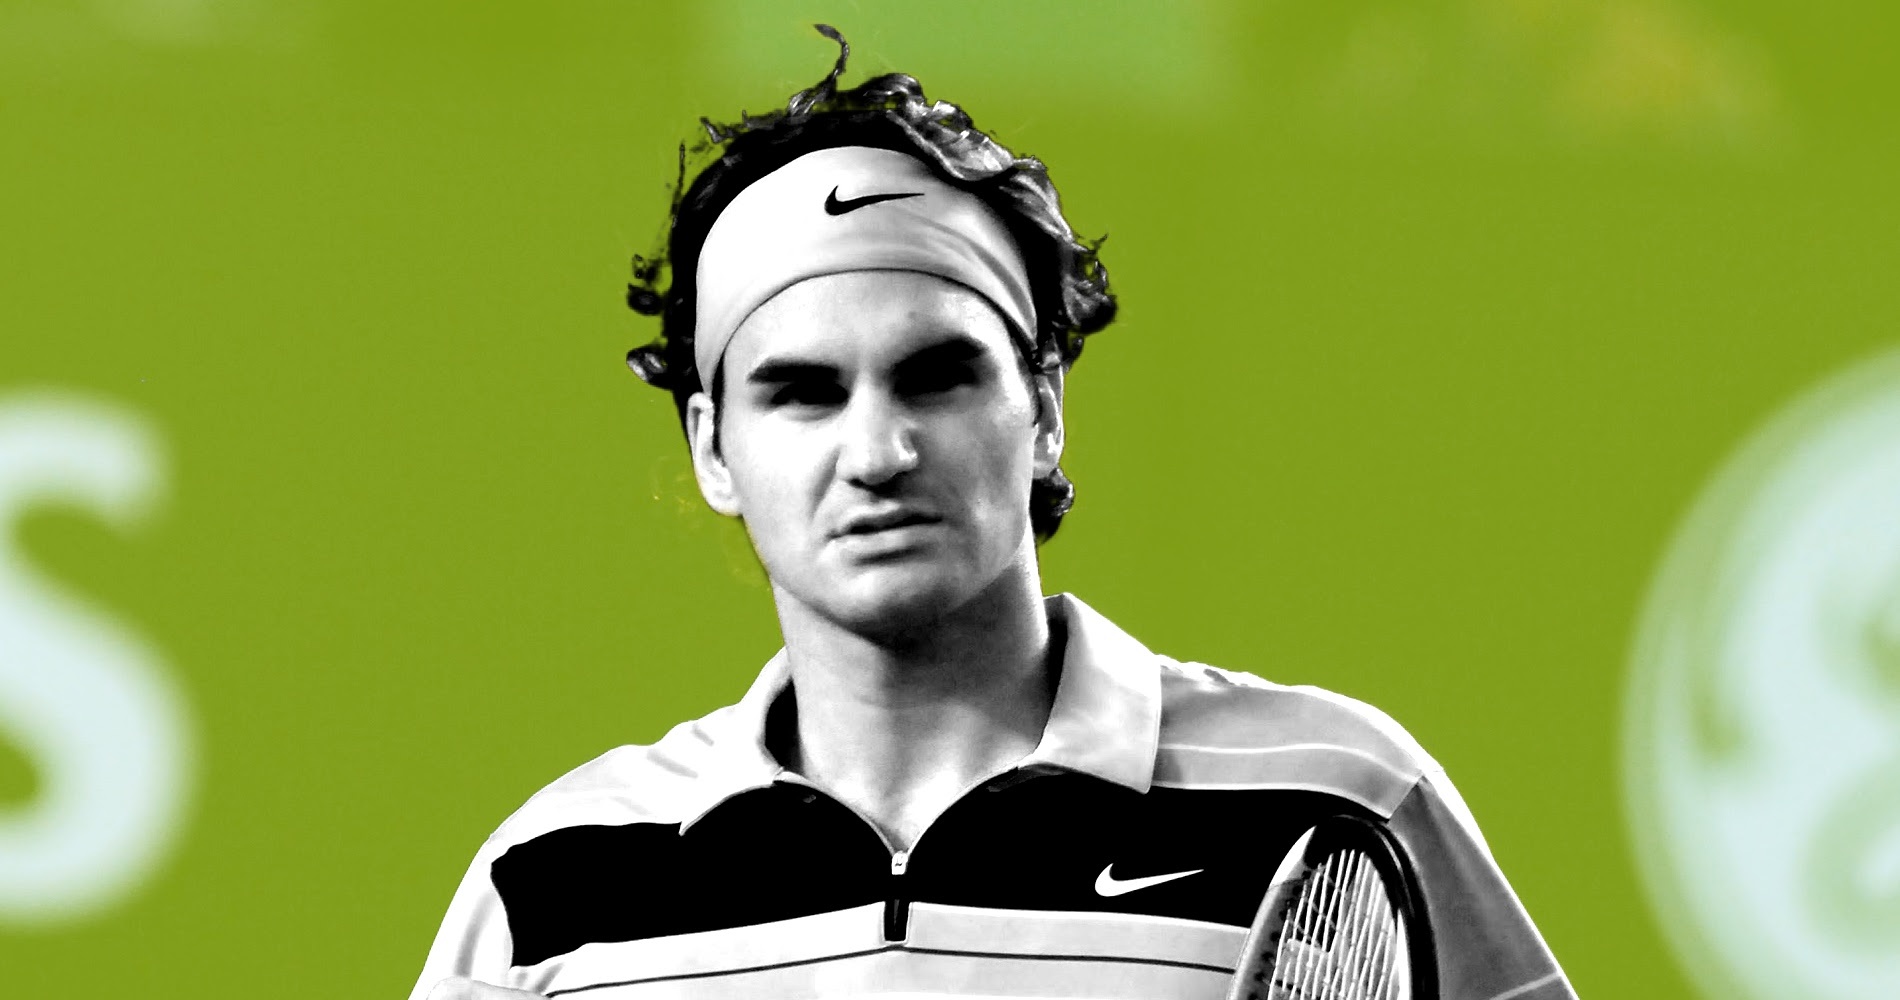 Roger Federer, On this day, 02/26